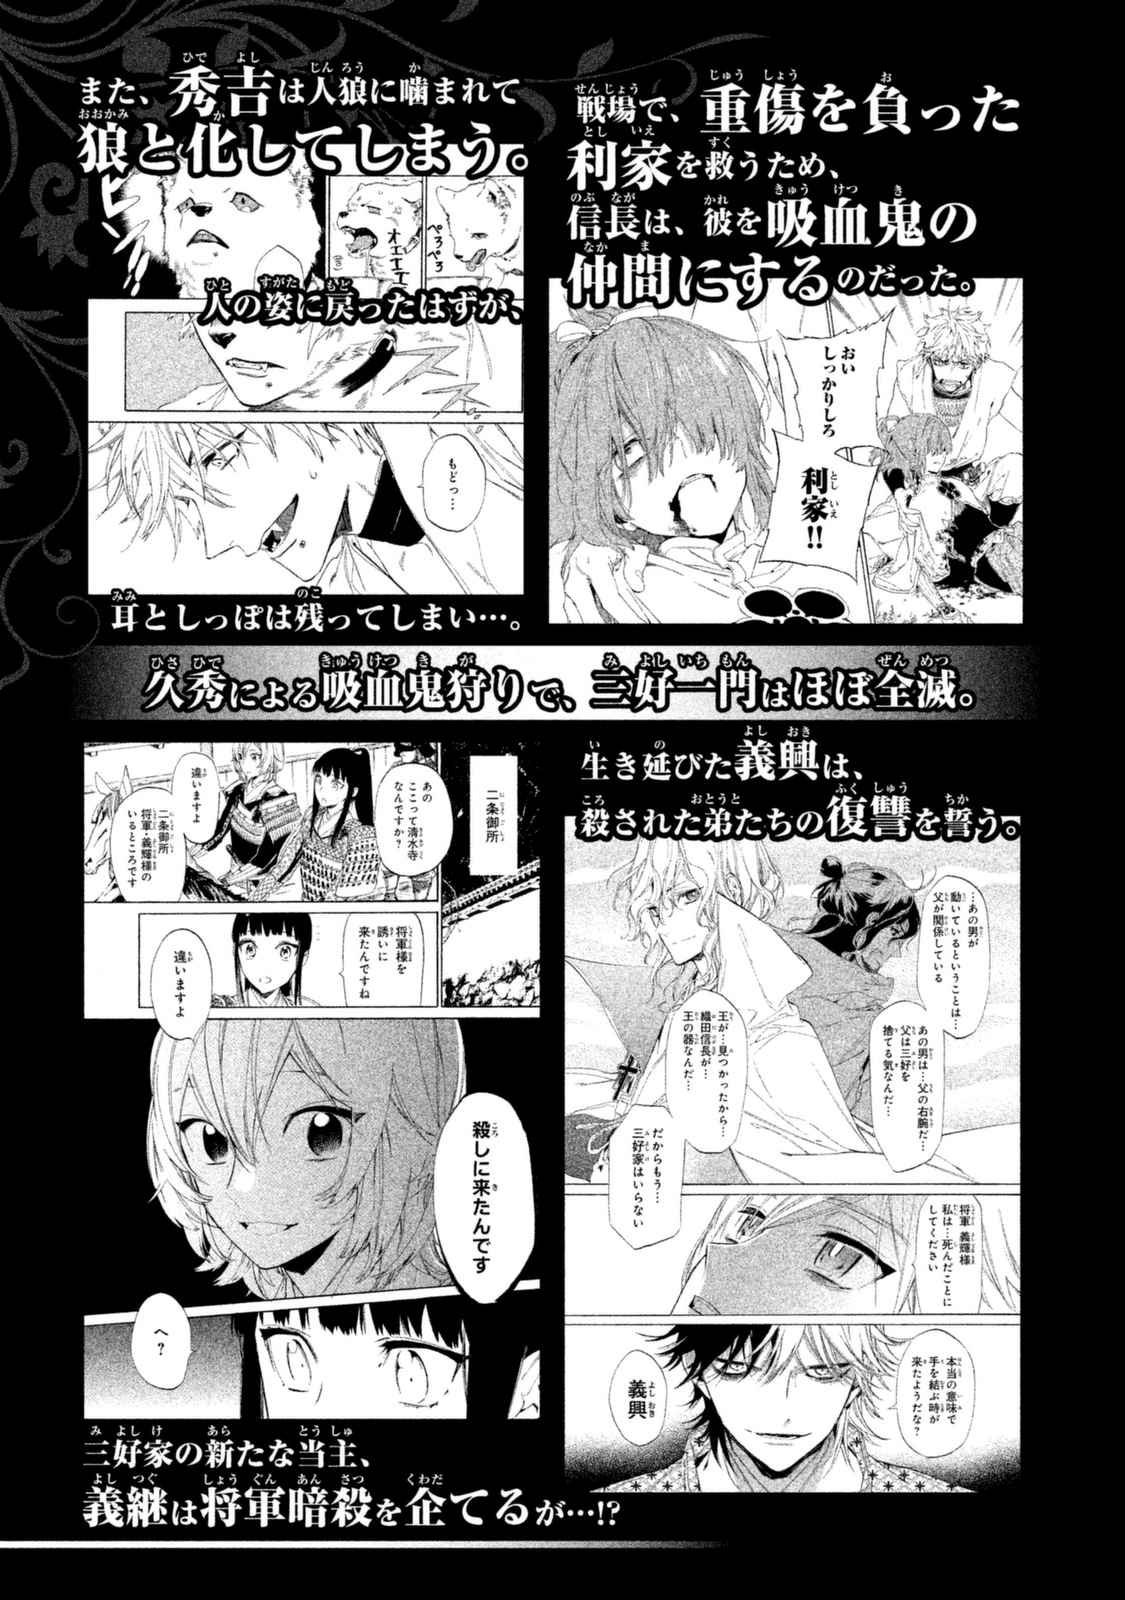 Sengoku Vamp Vol. 4 Ch. 12 What Nagayori Wants to Protect